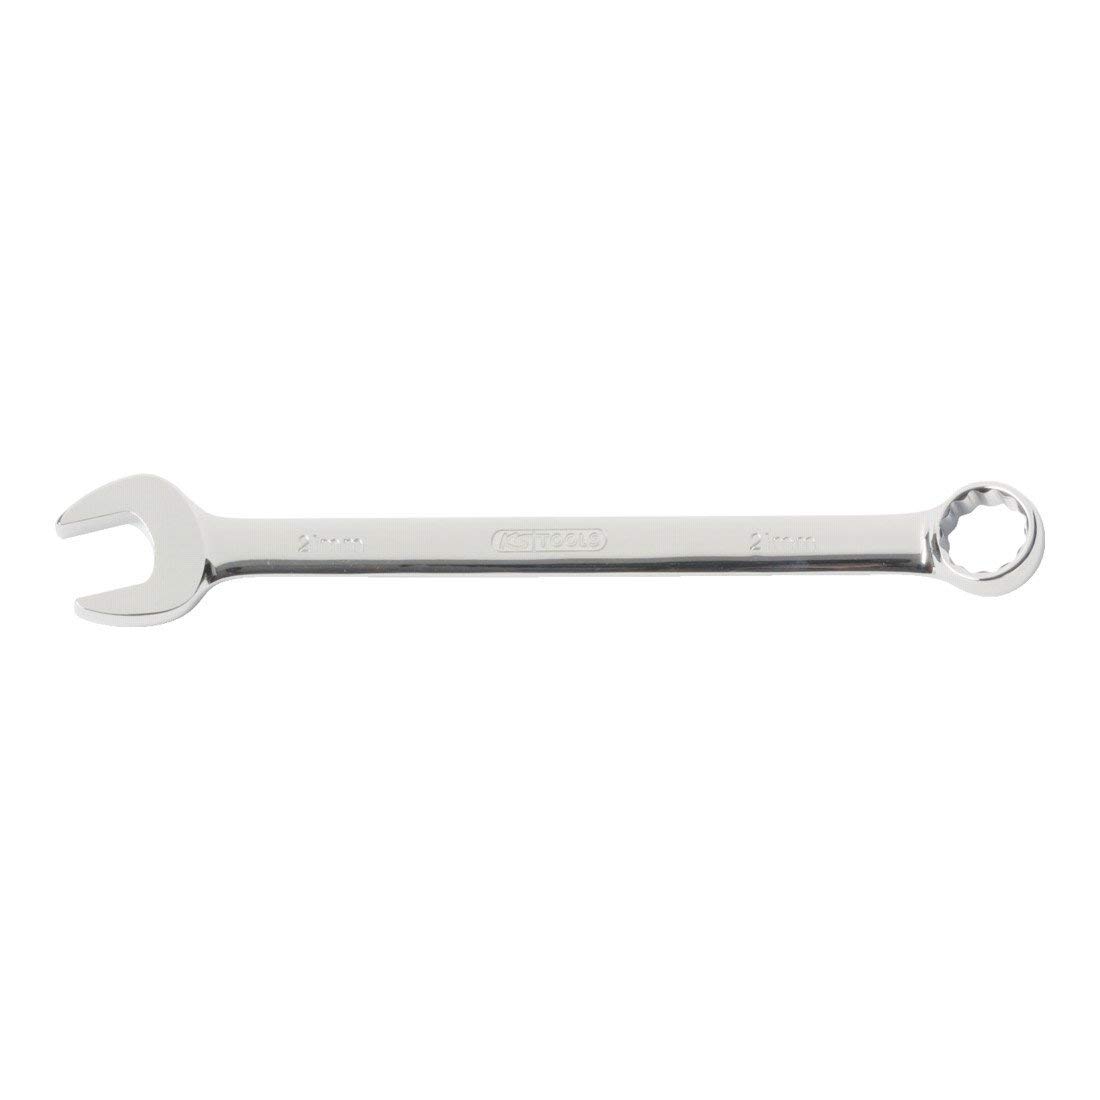 Ring-Maul-Schlüssel 7 mm DIN 3113 133,75 mmL,verchromt, hochglanz poliert von KS Tools